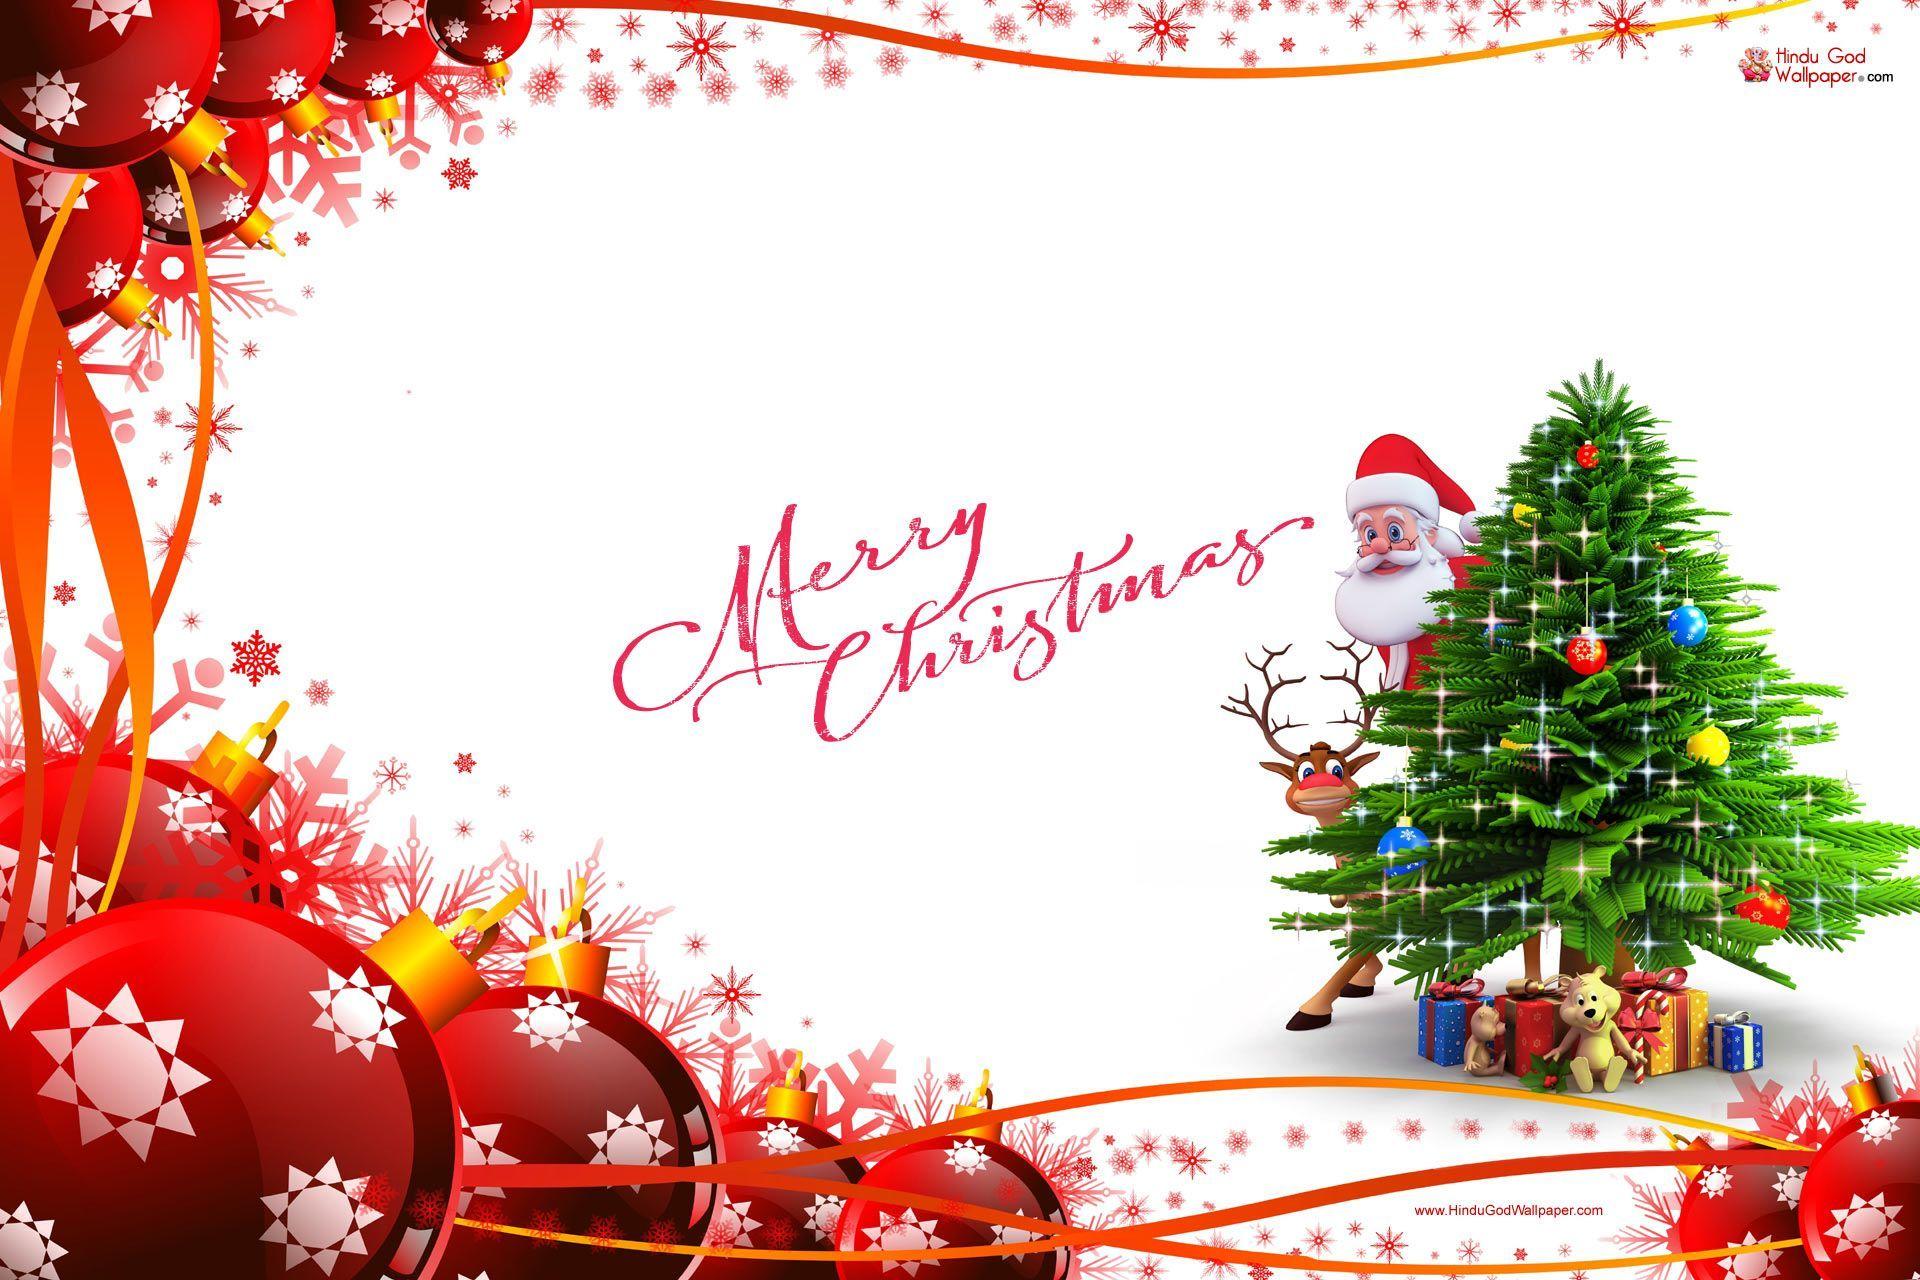 Cute Christmas HD Wallpaper Free Download. Merry christmas